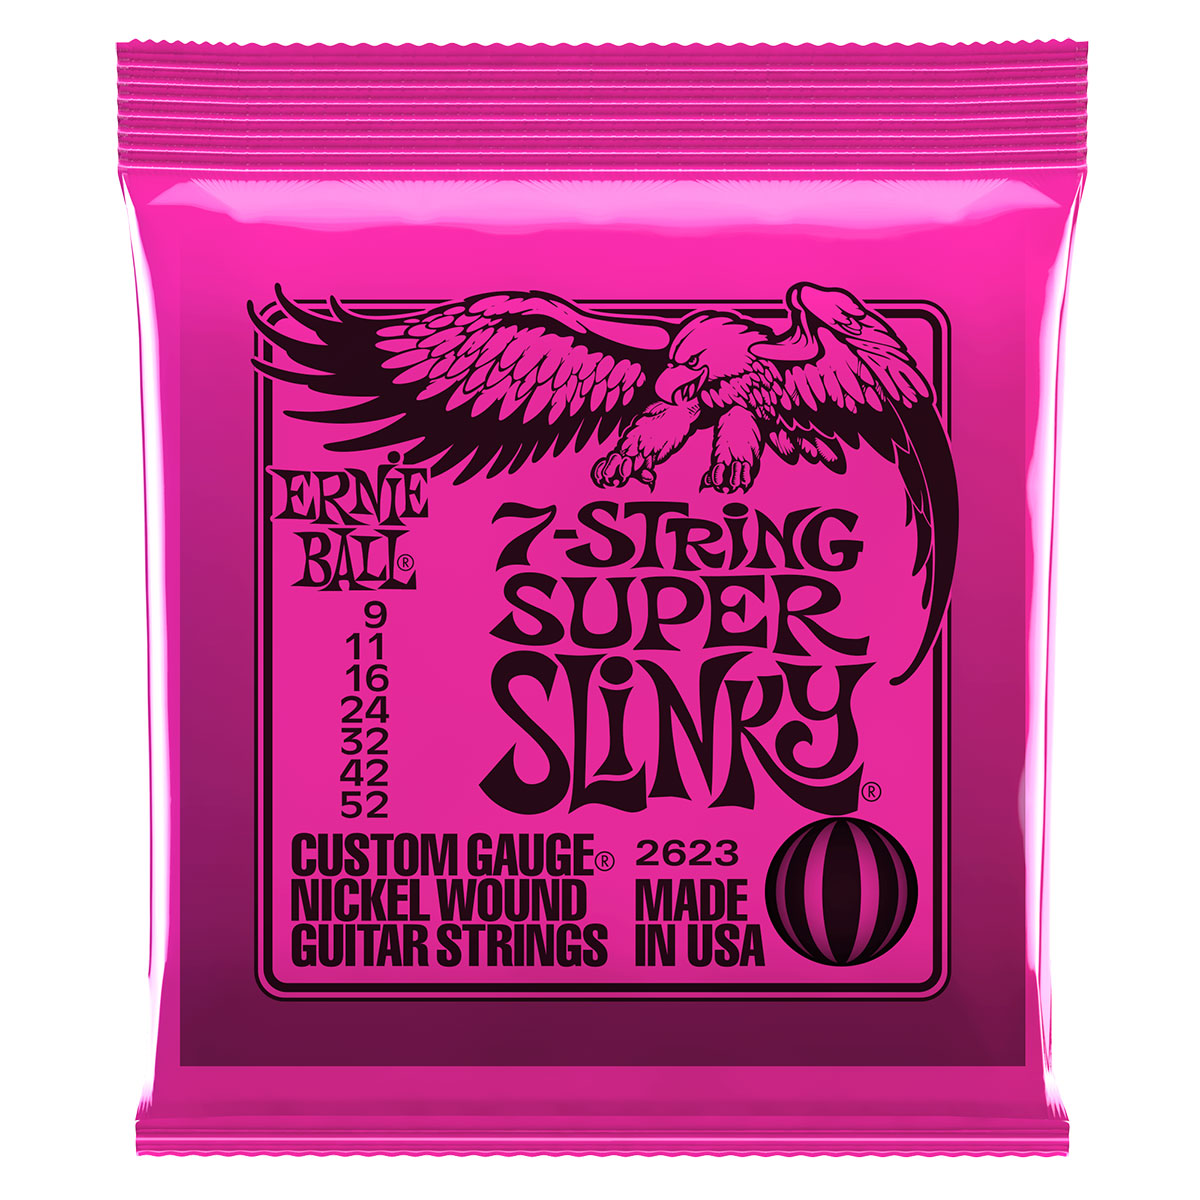 An image of Ernie Ball 2623 7 String Super Slinky 9 - 52